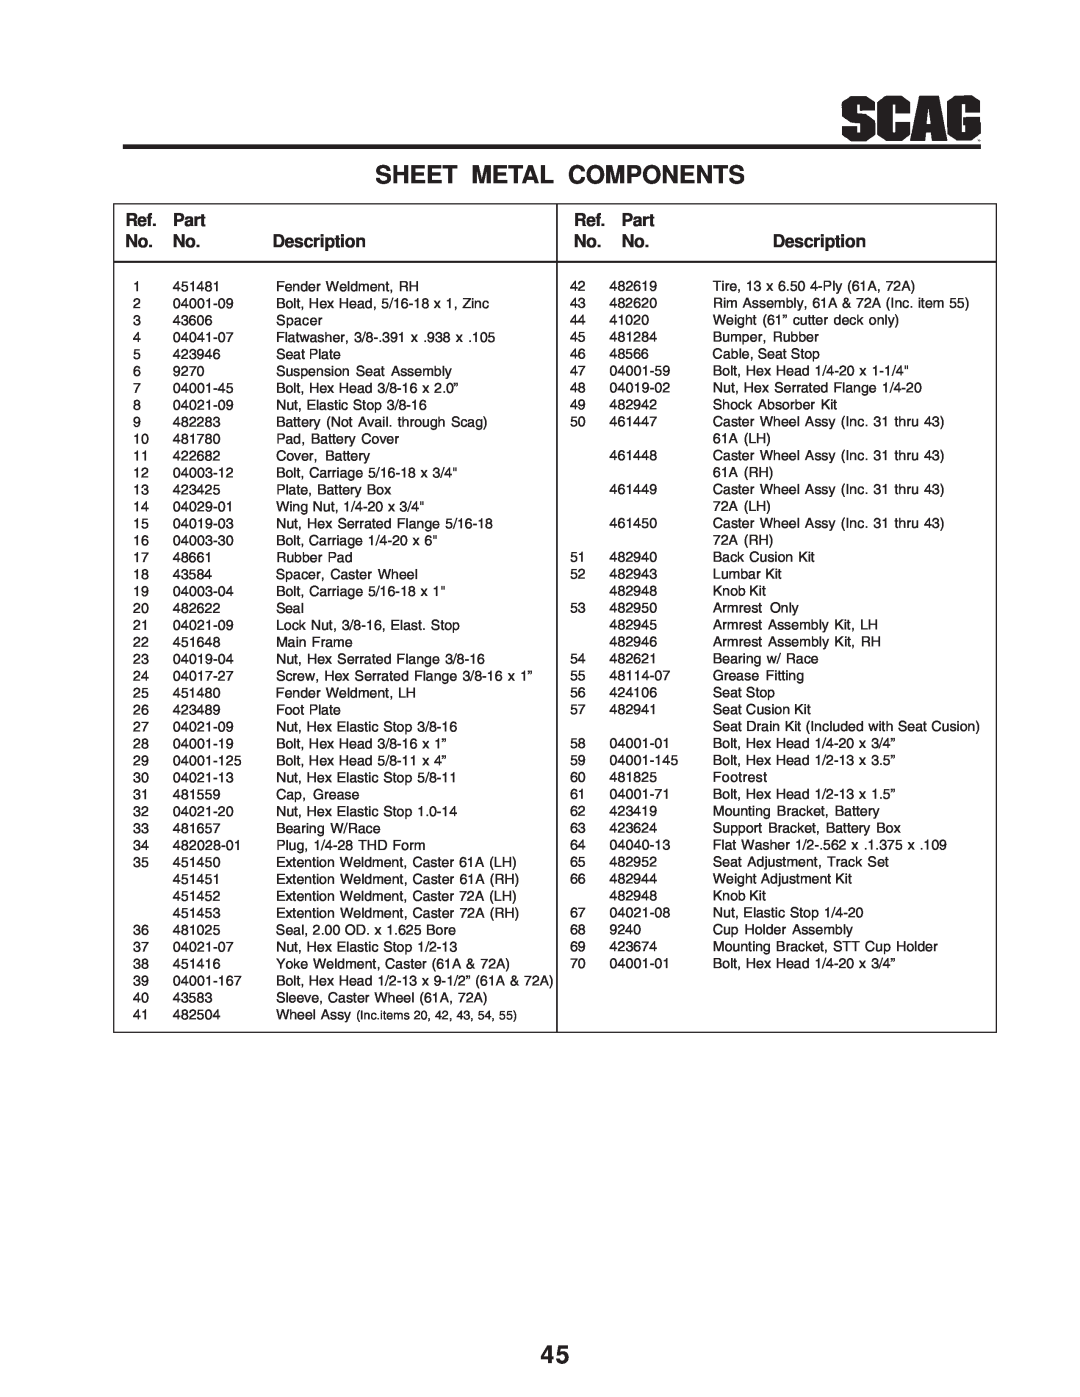 Scag Power Equipment STT-31BSD manual Sheet Metal Components, Part, Description 